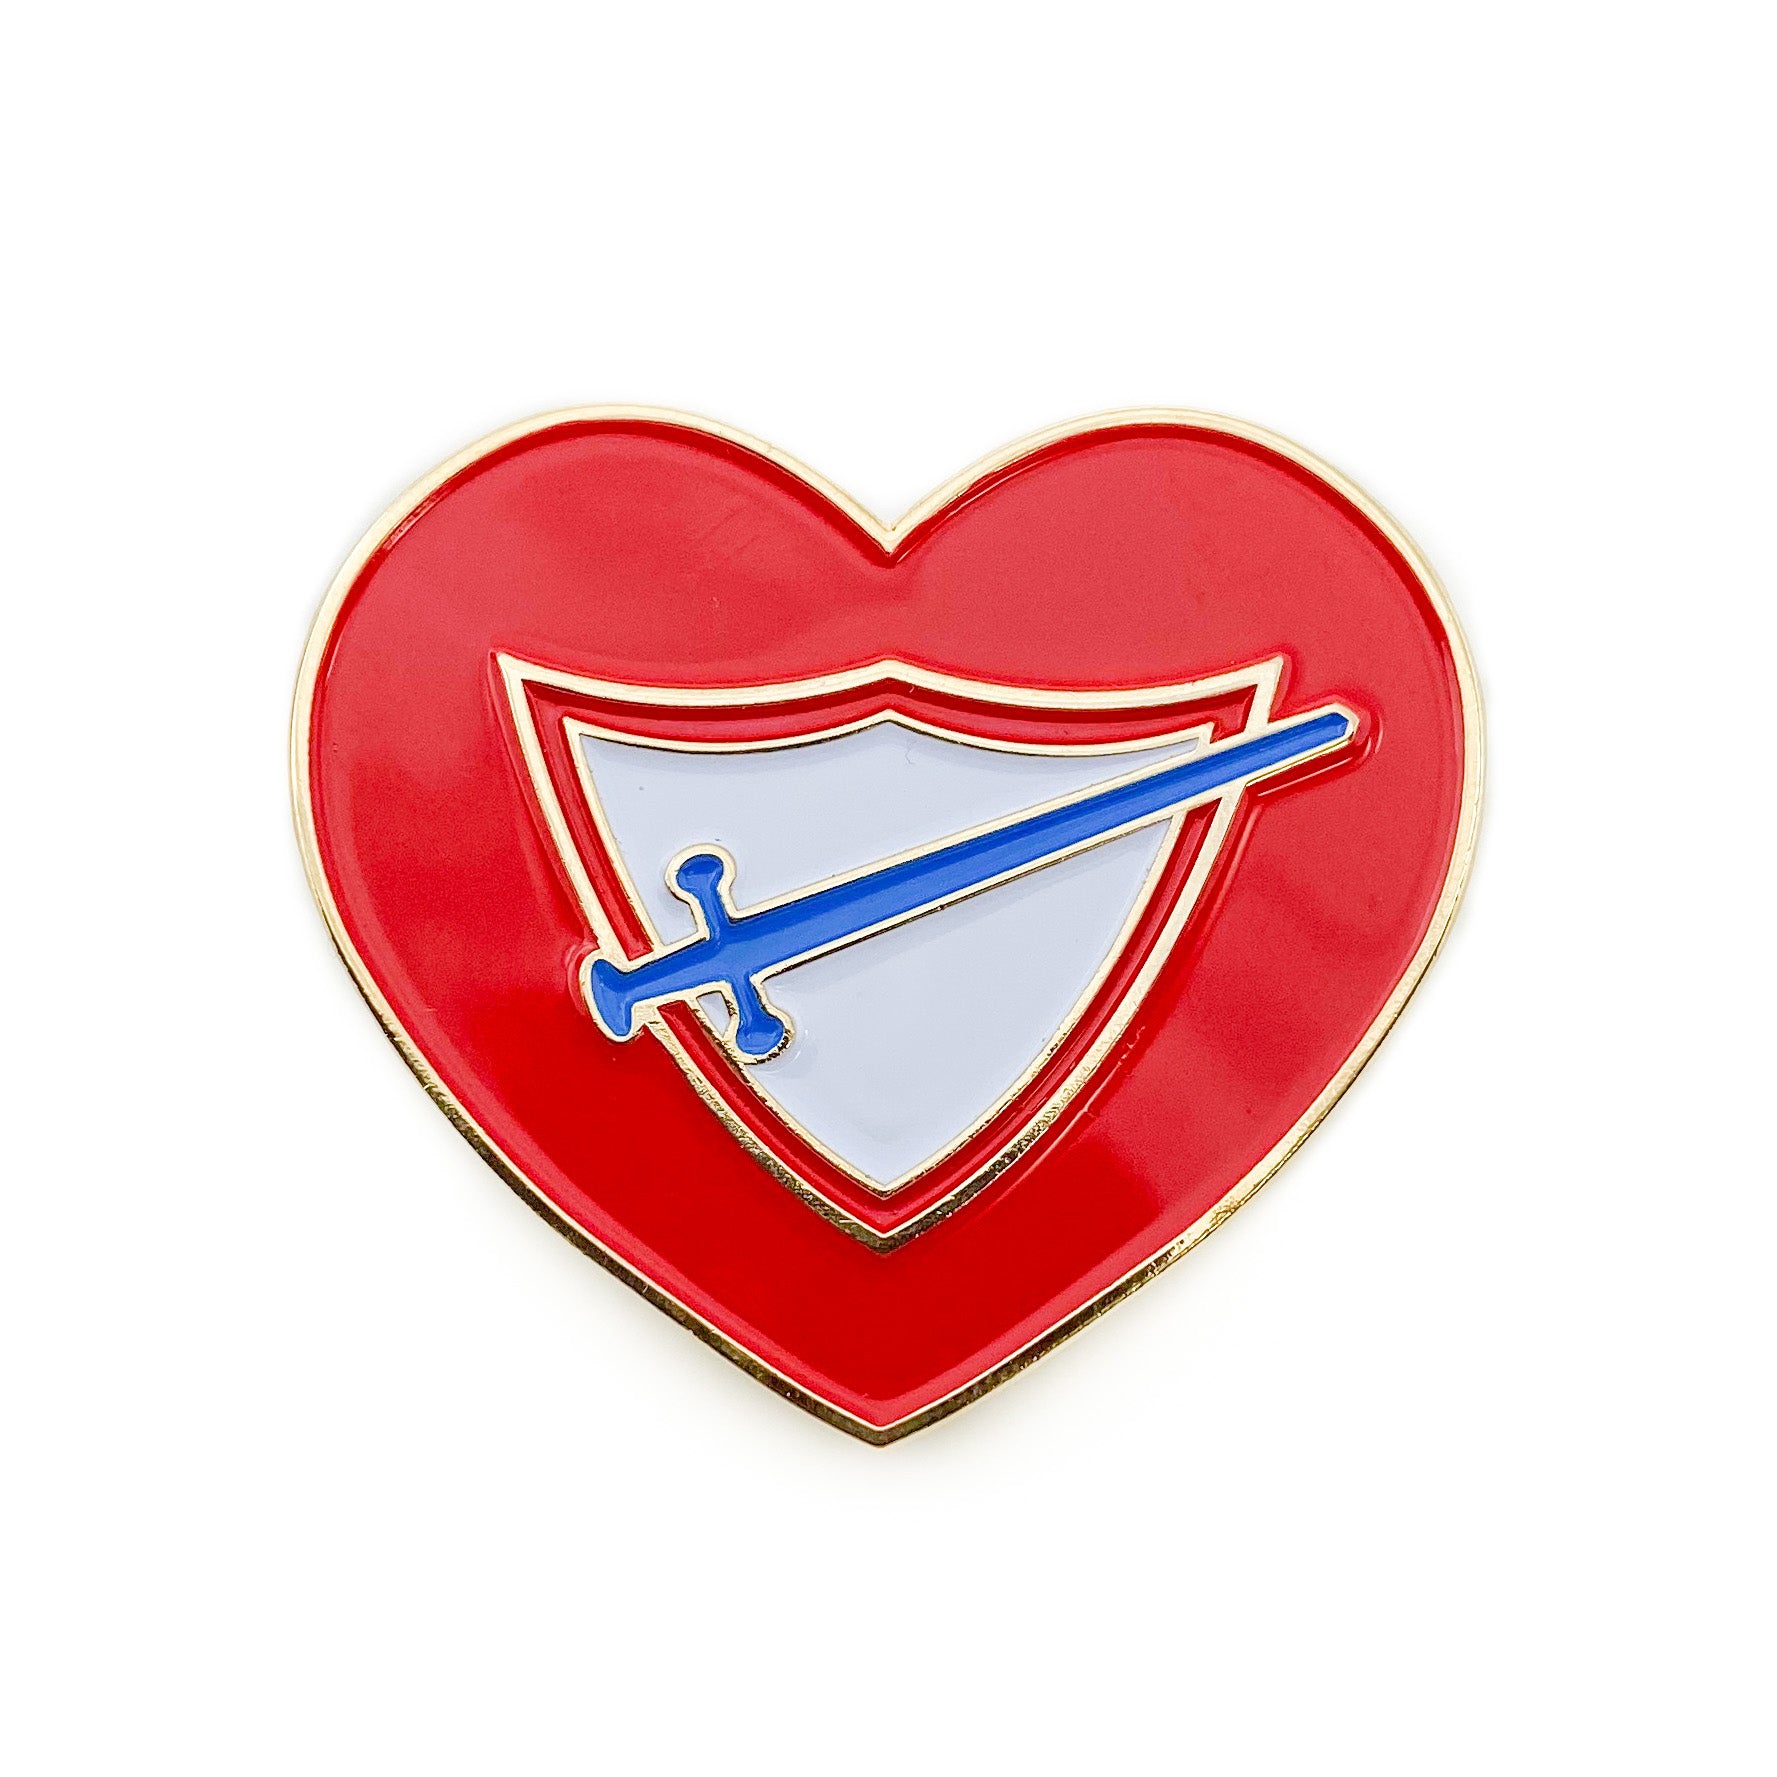 Pathfinder Club Heart Pin - Pinfinder Club